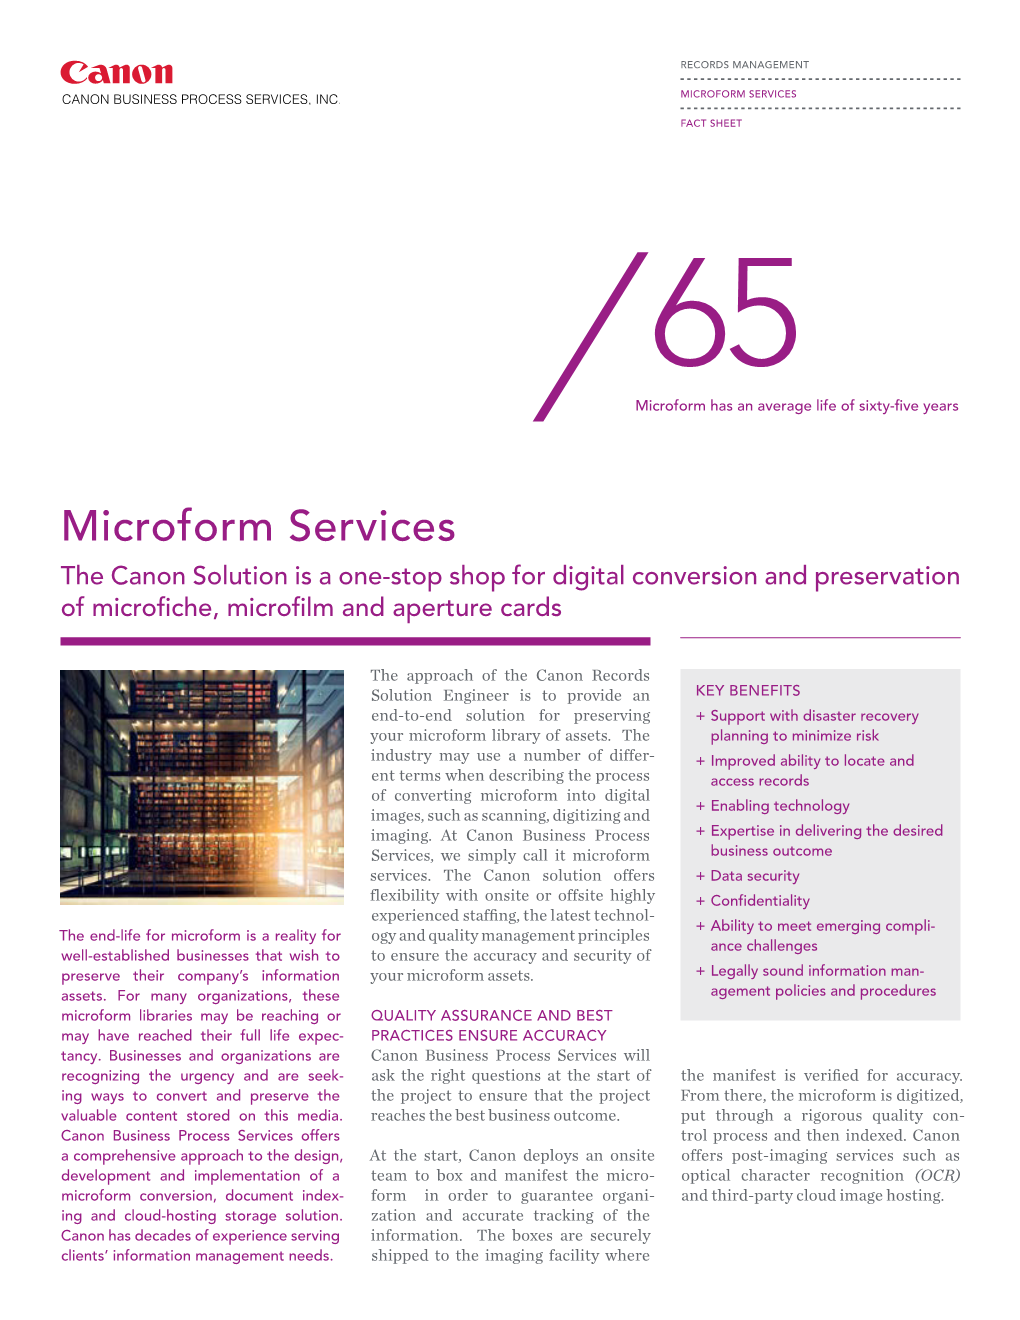 Microform Services